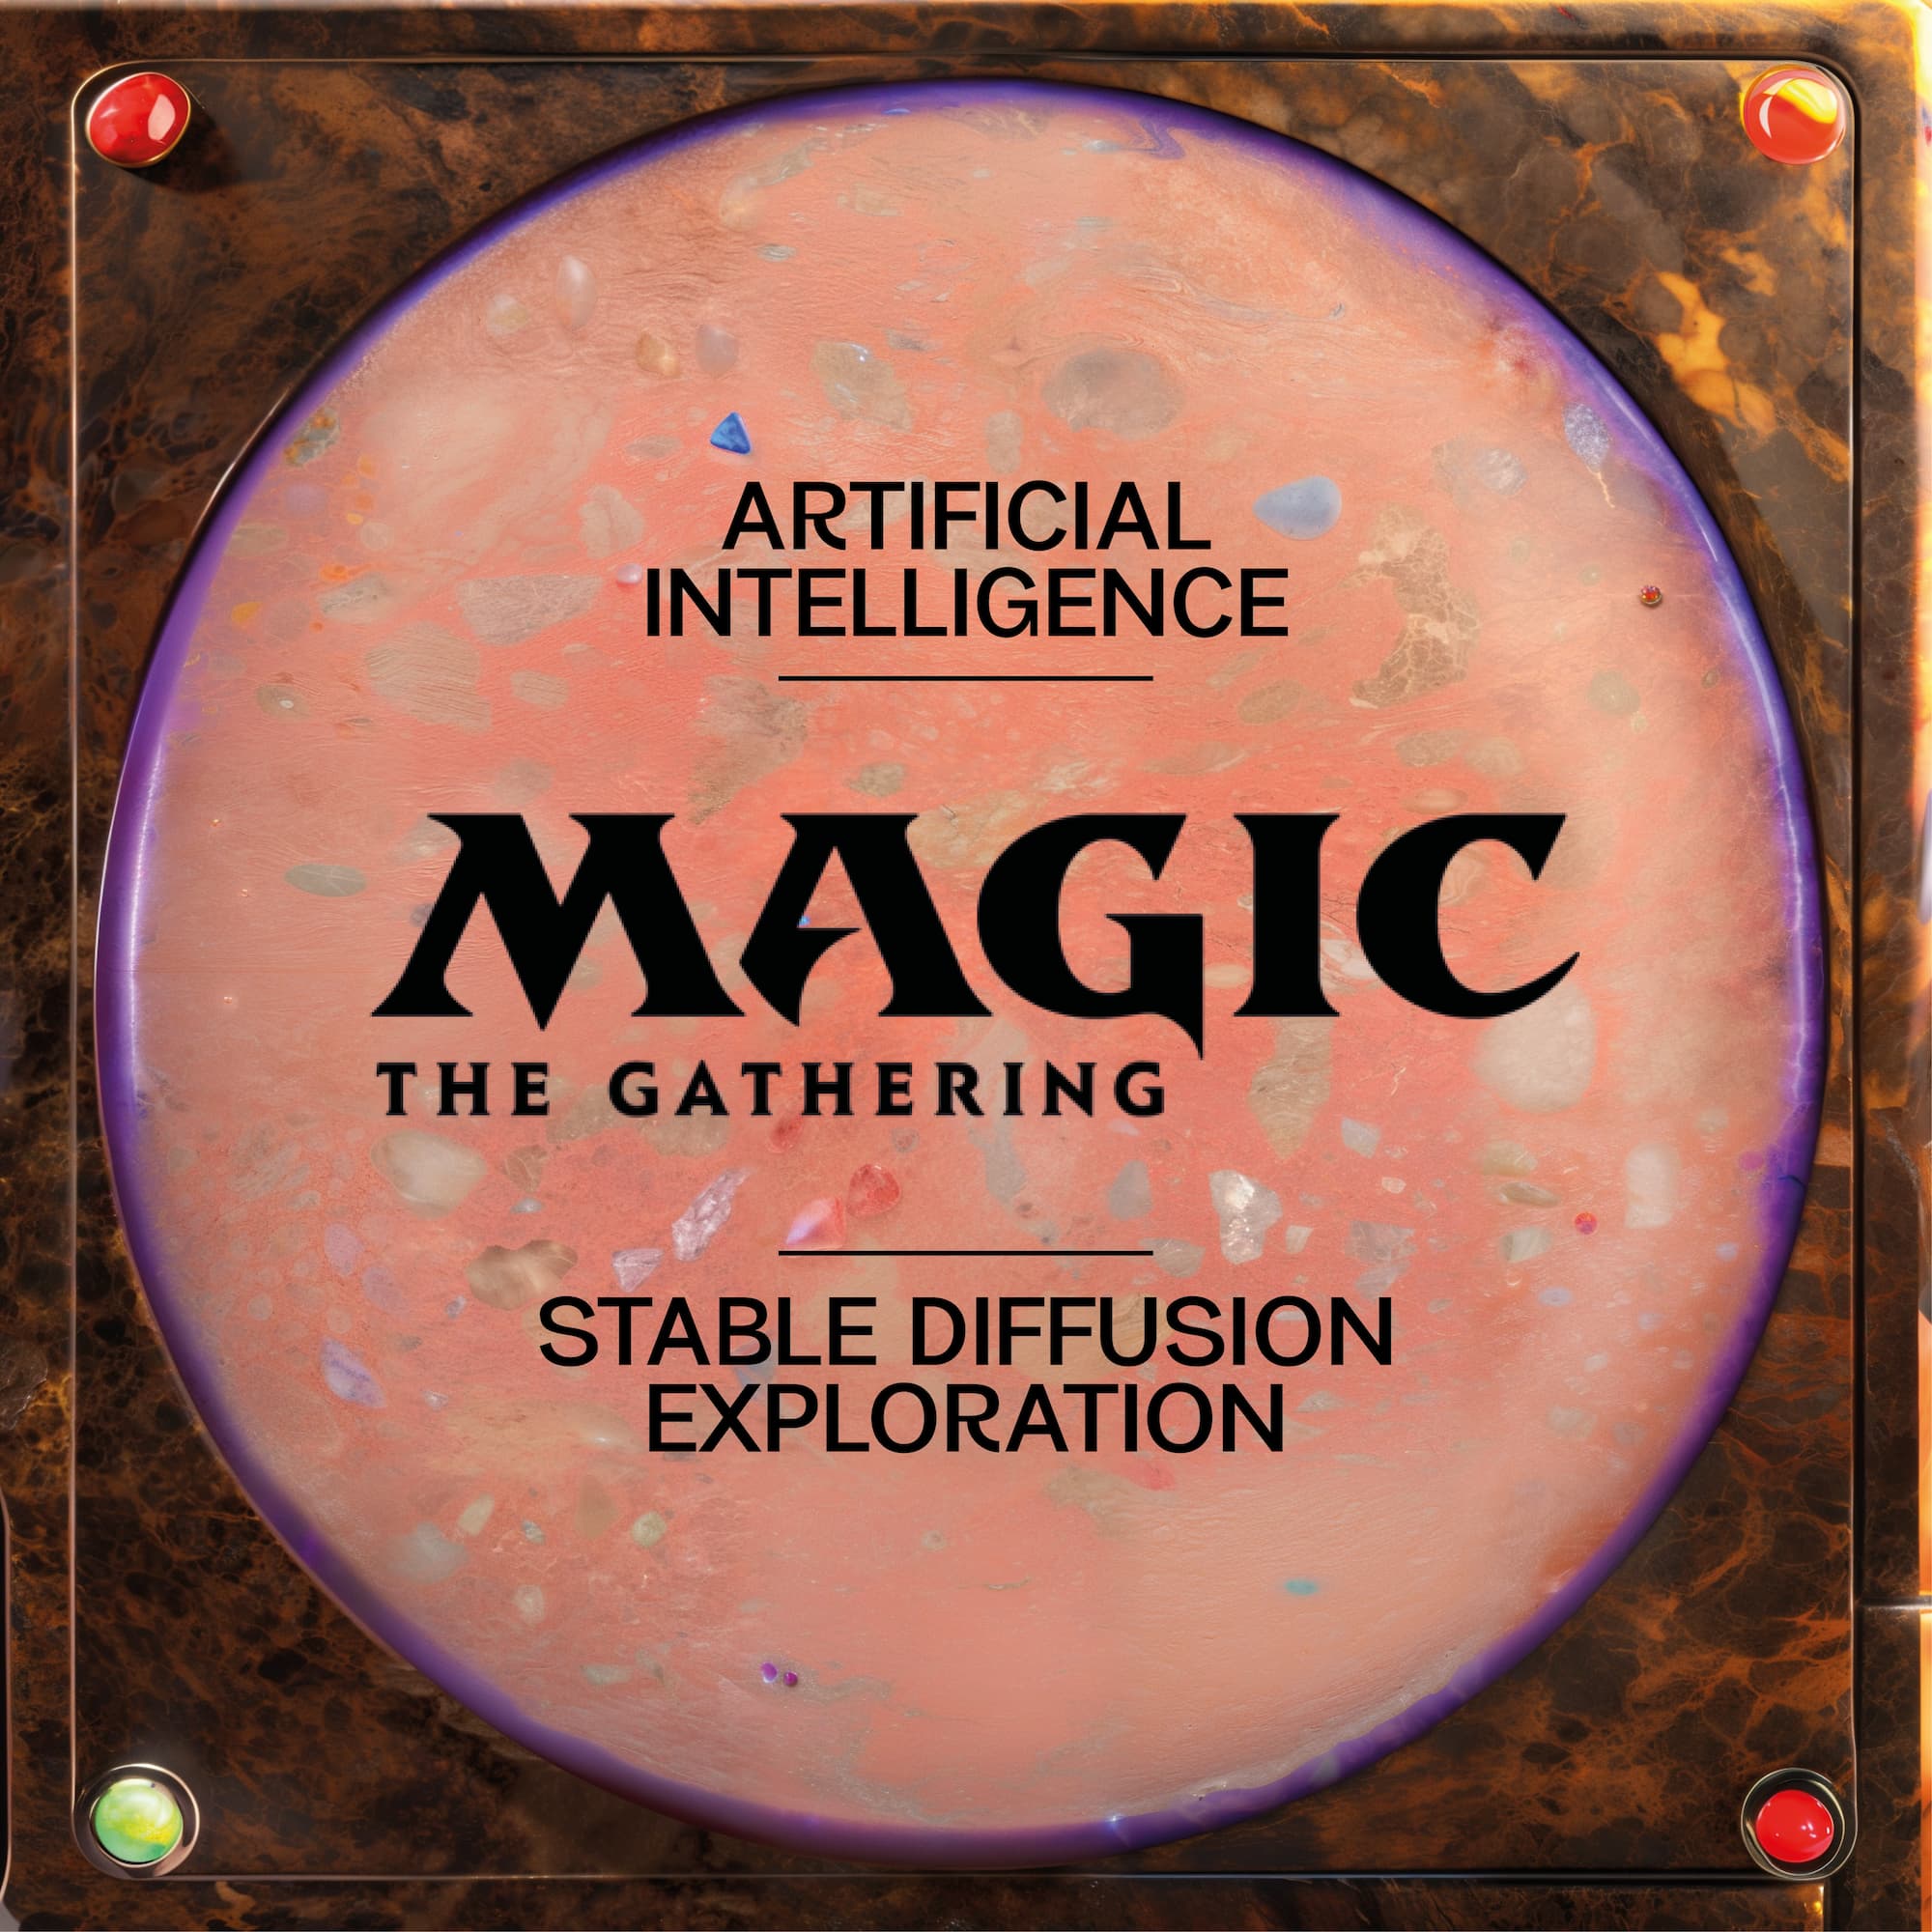 Magic: The Gathering, exploration on AI